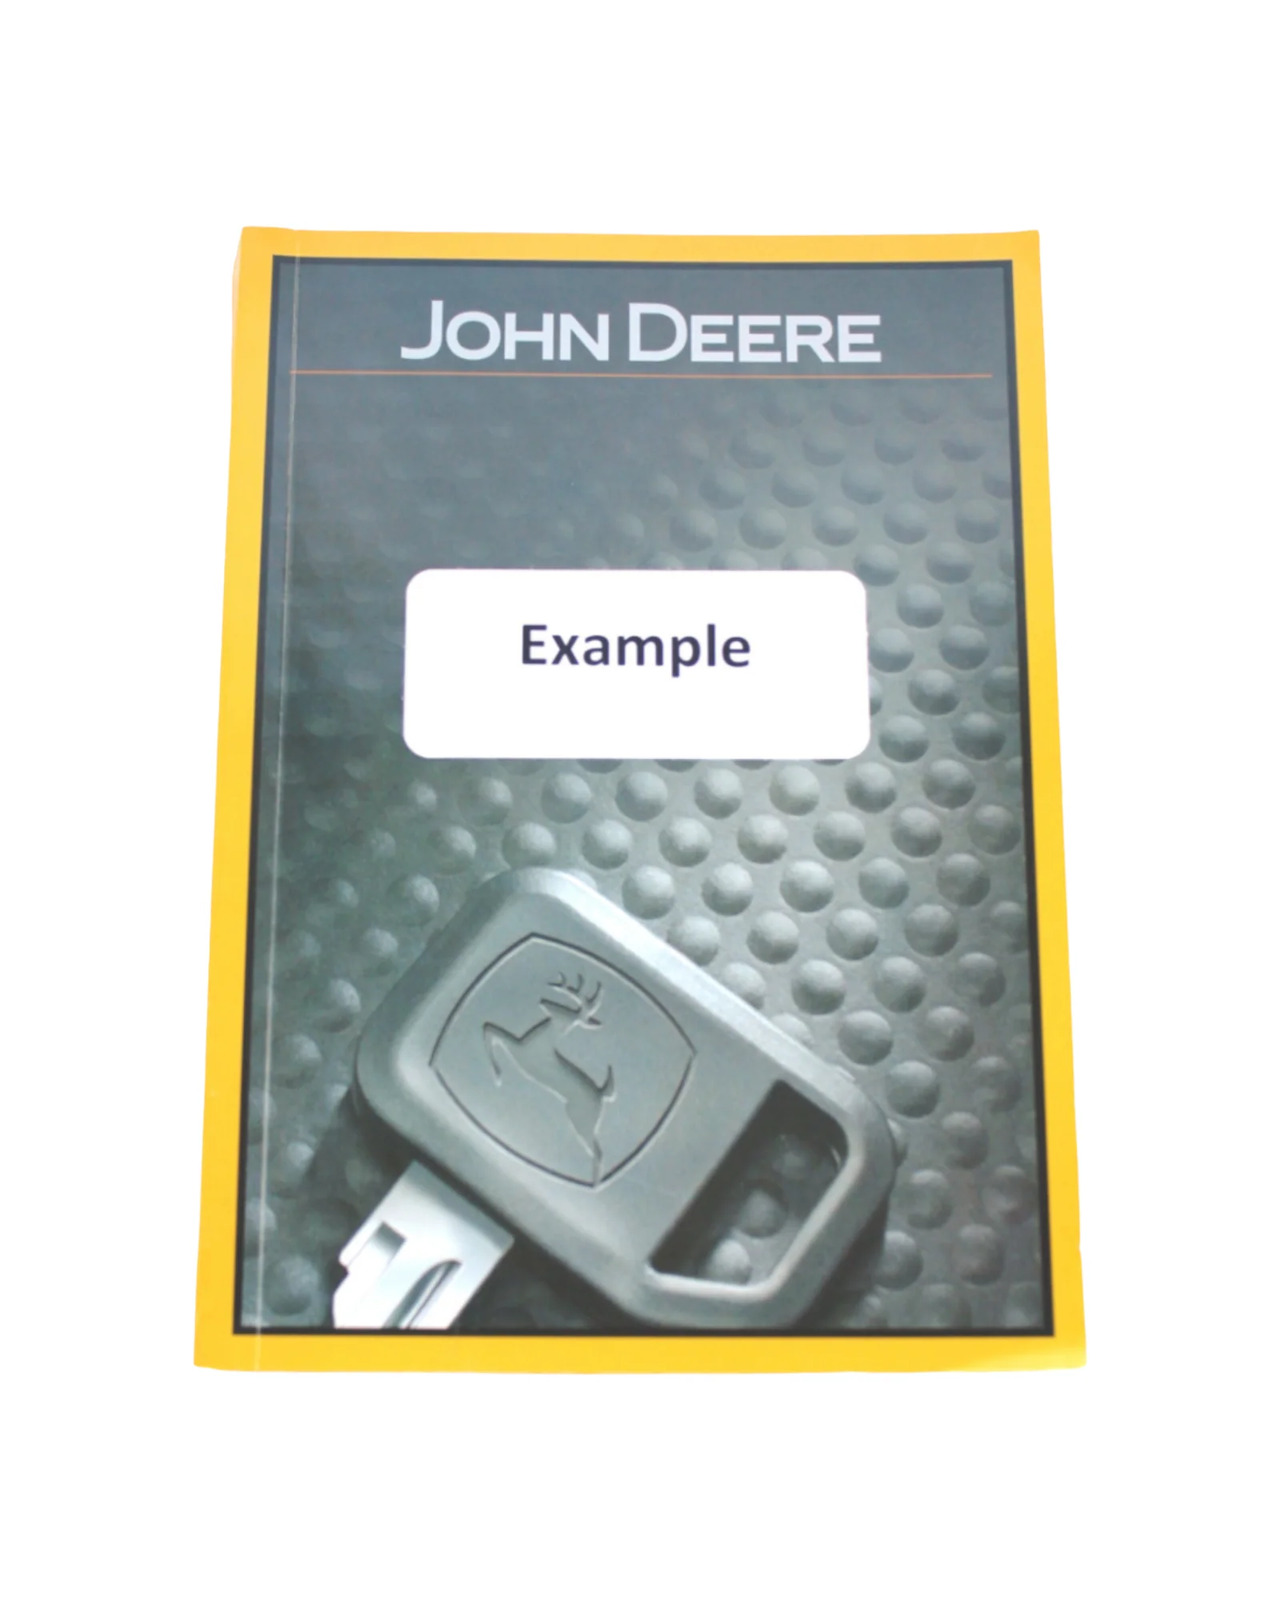 JOHN DEERE 655K CRAWLER LOADER OPERATION TEST SERVICE MANUAL _F339207—